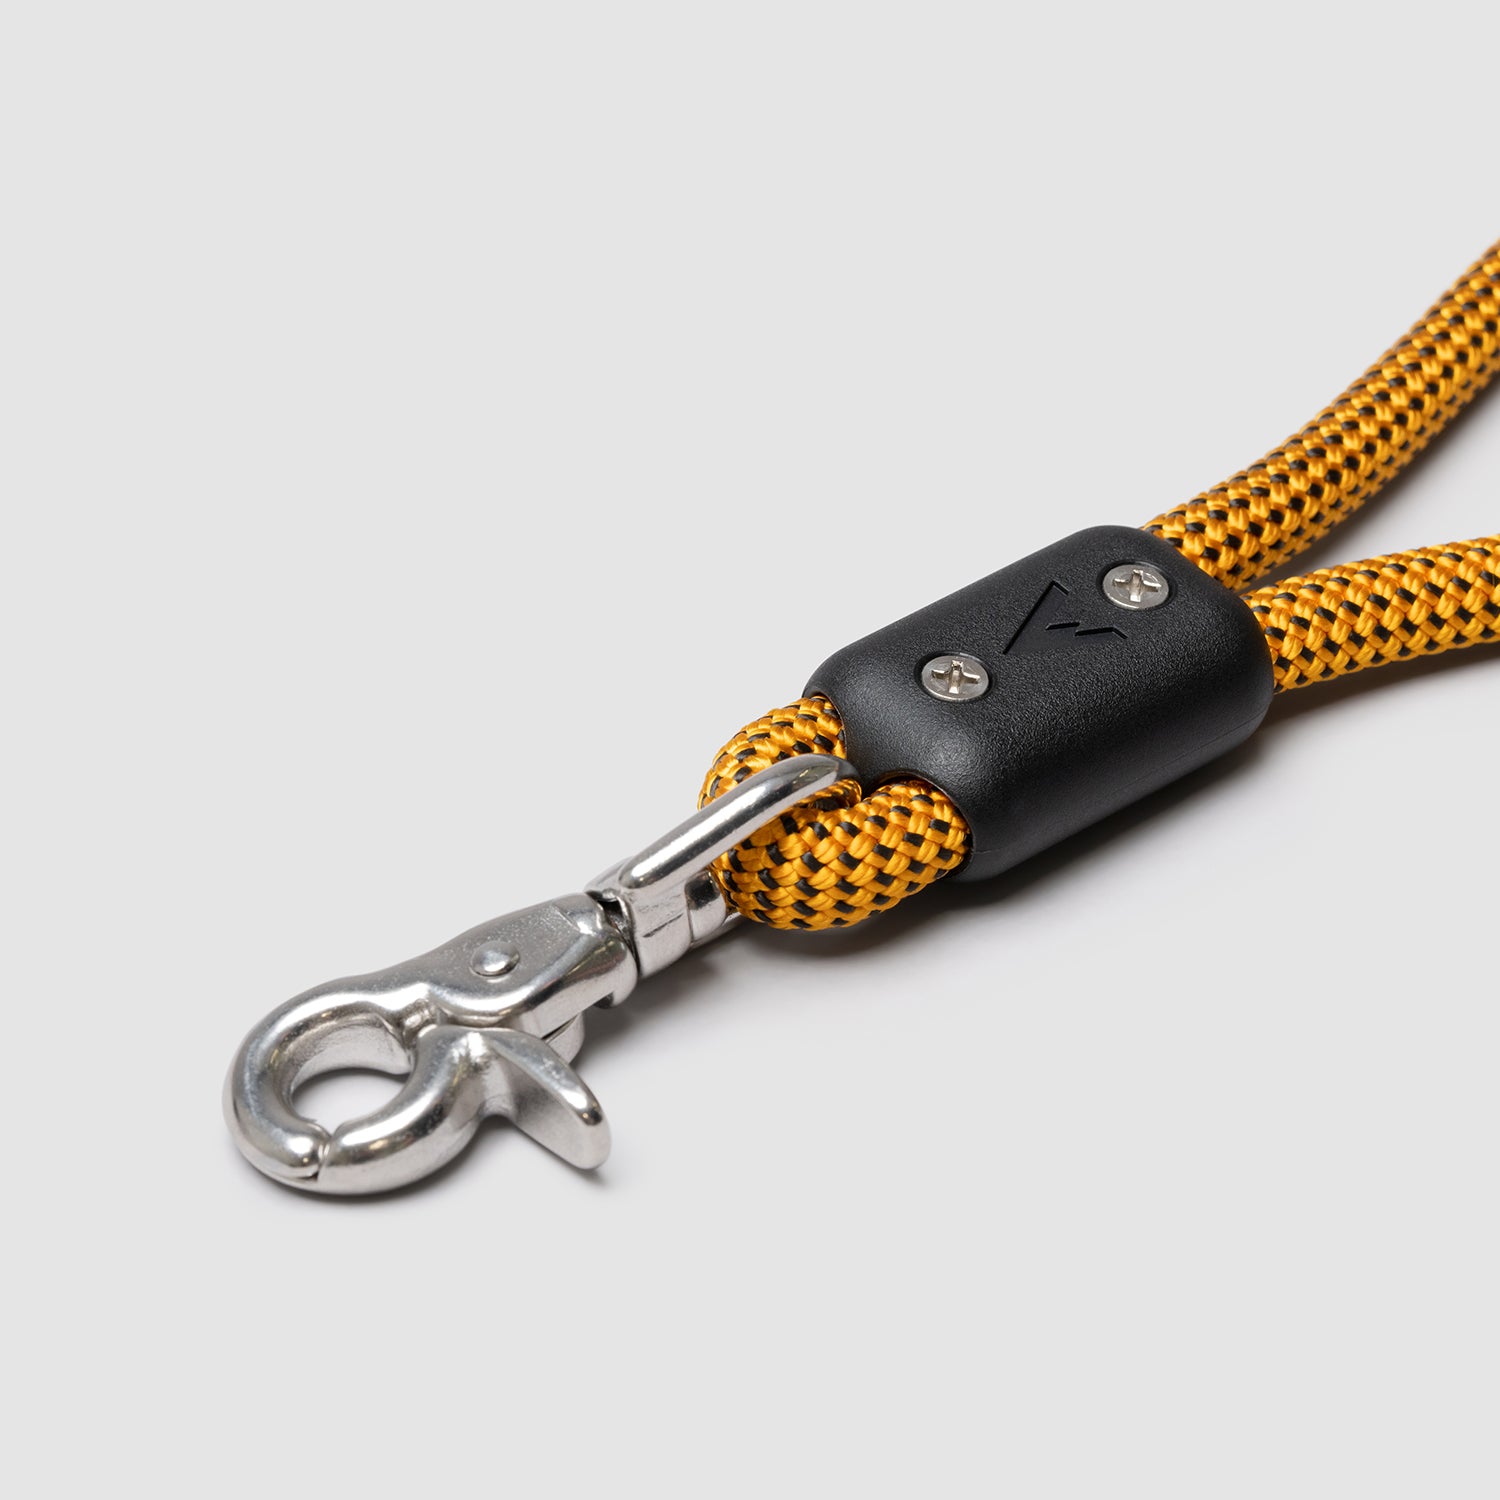 atlas pet company lifetime handle climbing rope lifetime warranty trail handle for active dogs --honey